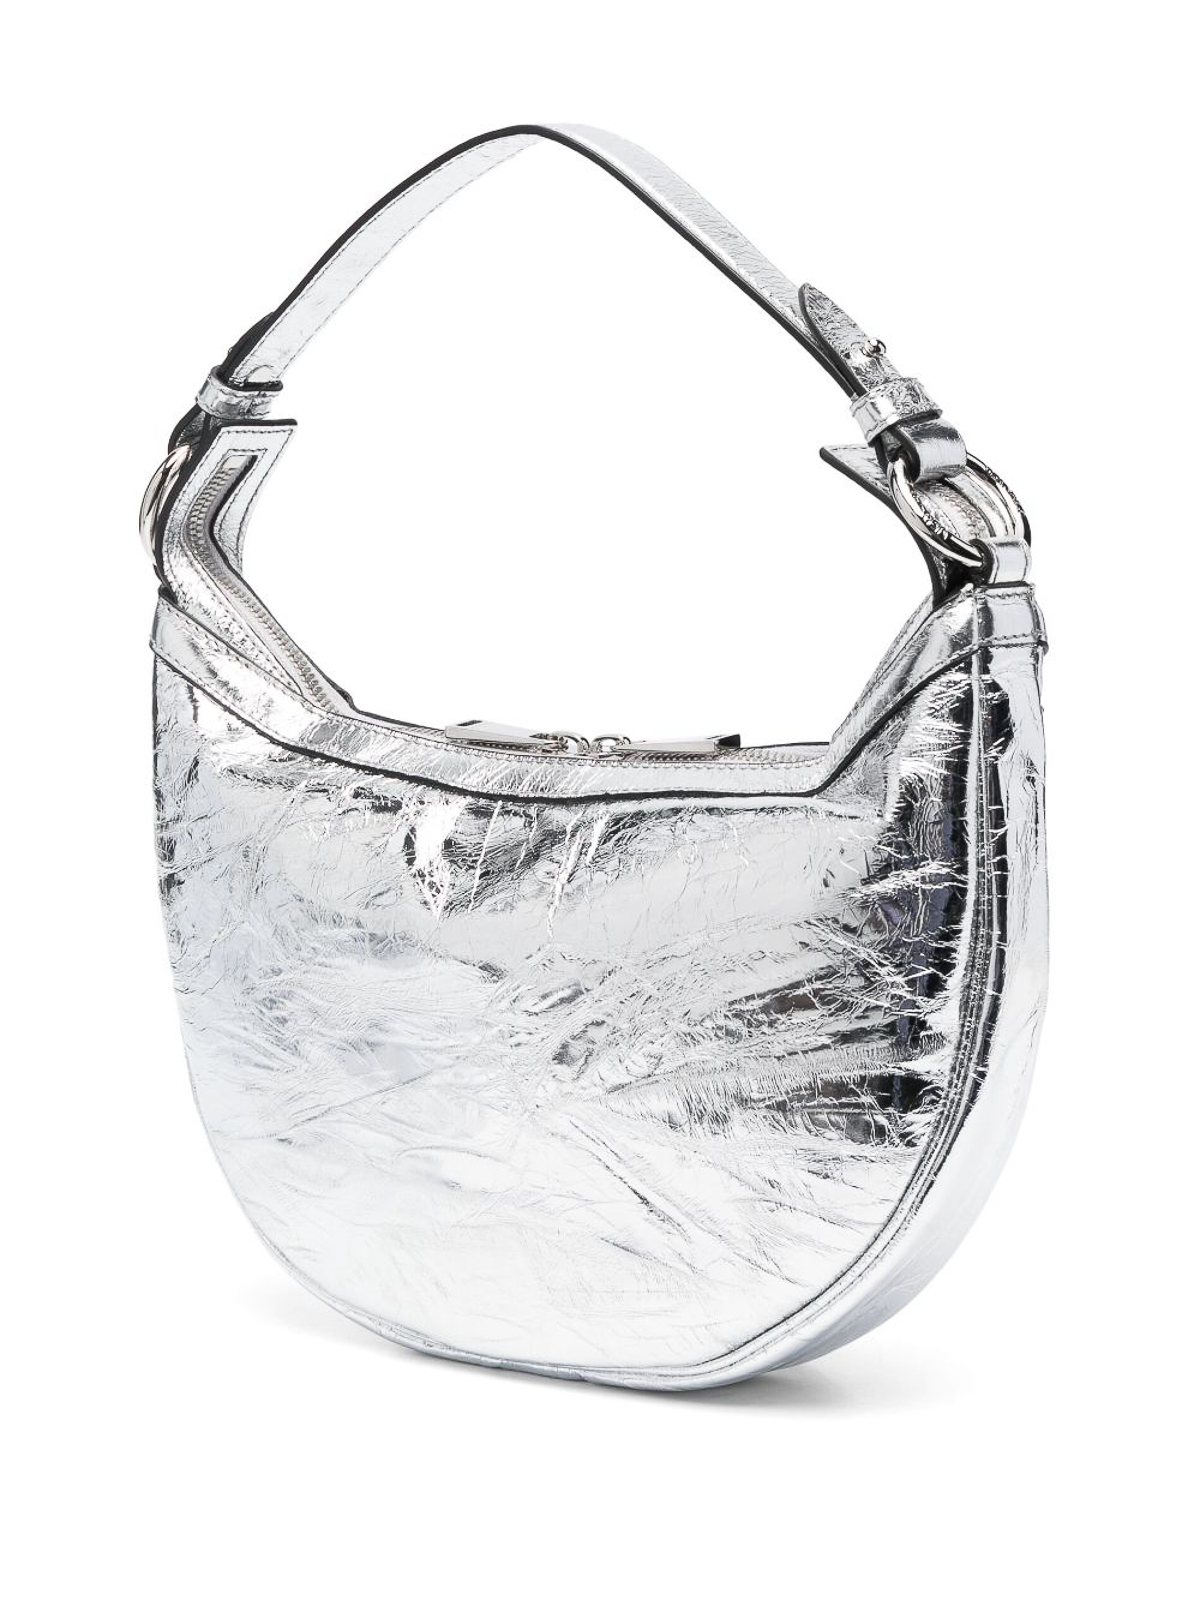 Silver Bags for Women, Shop Online